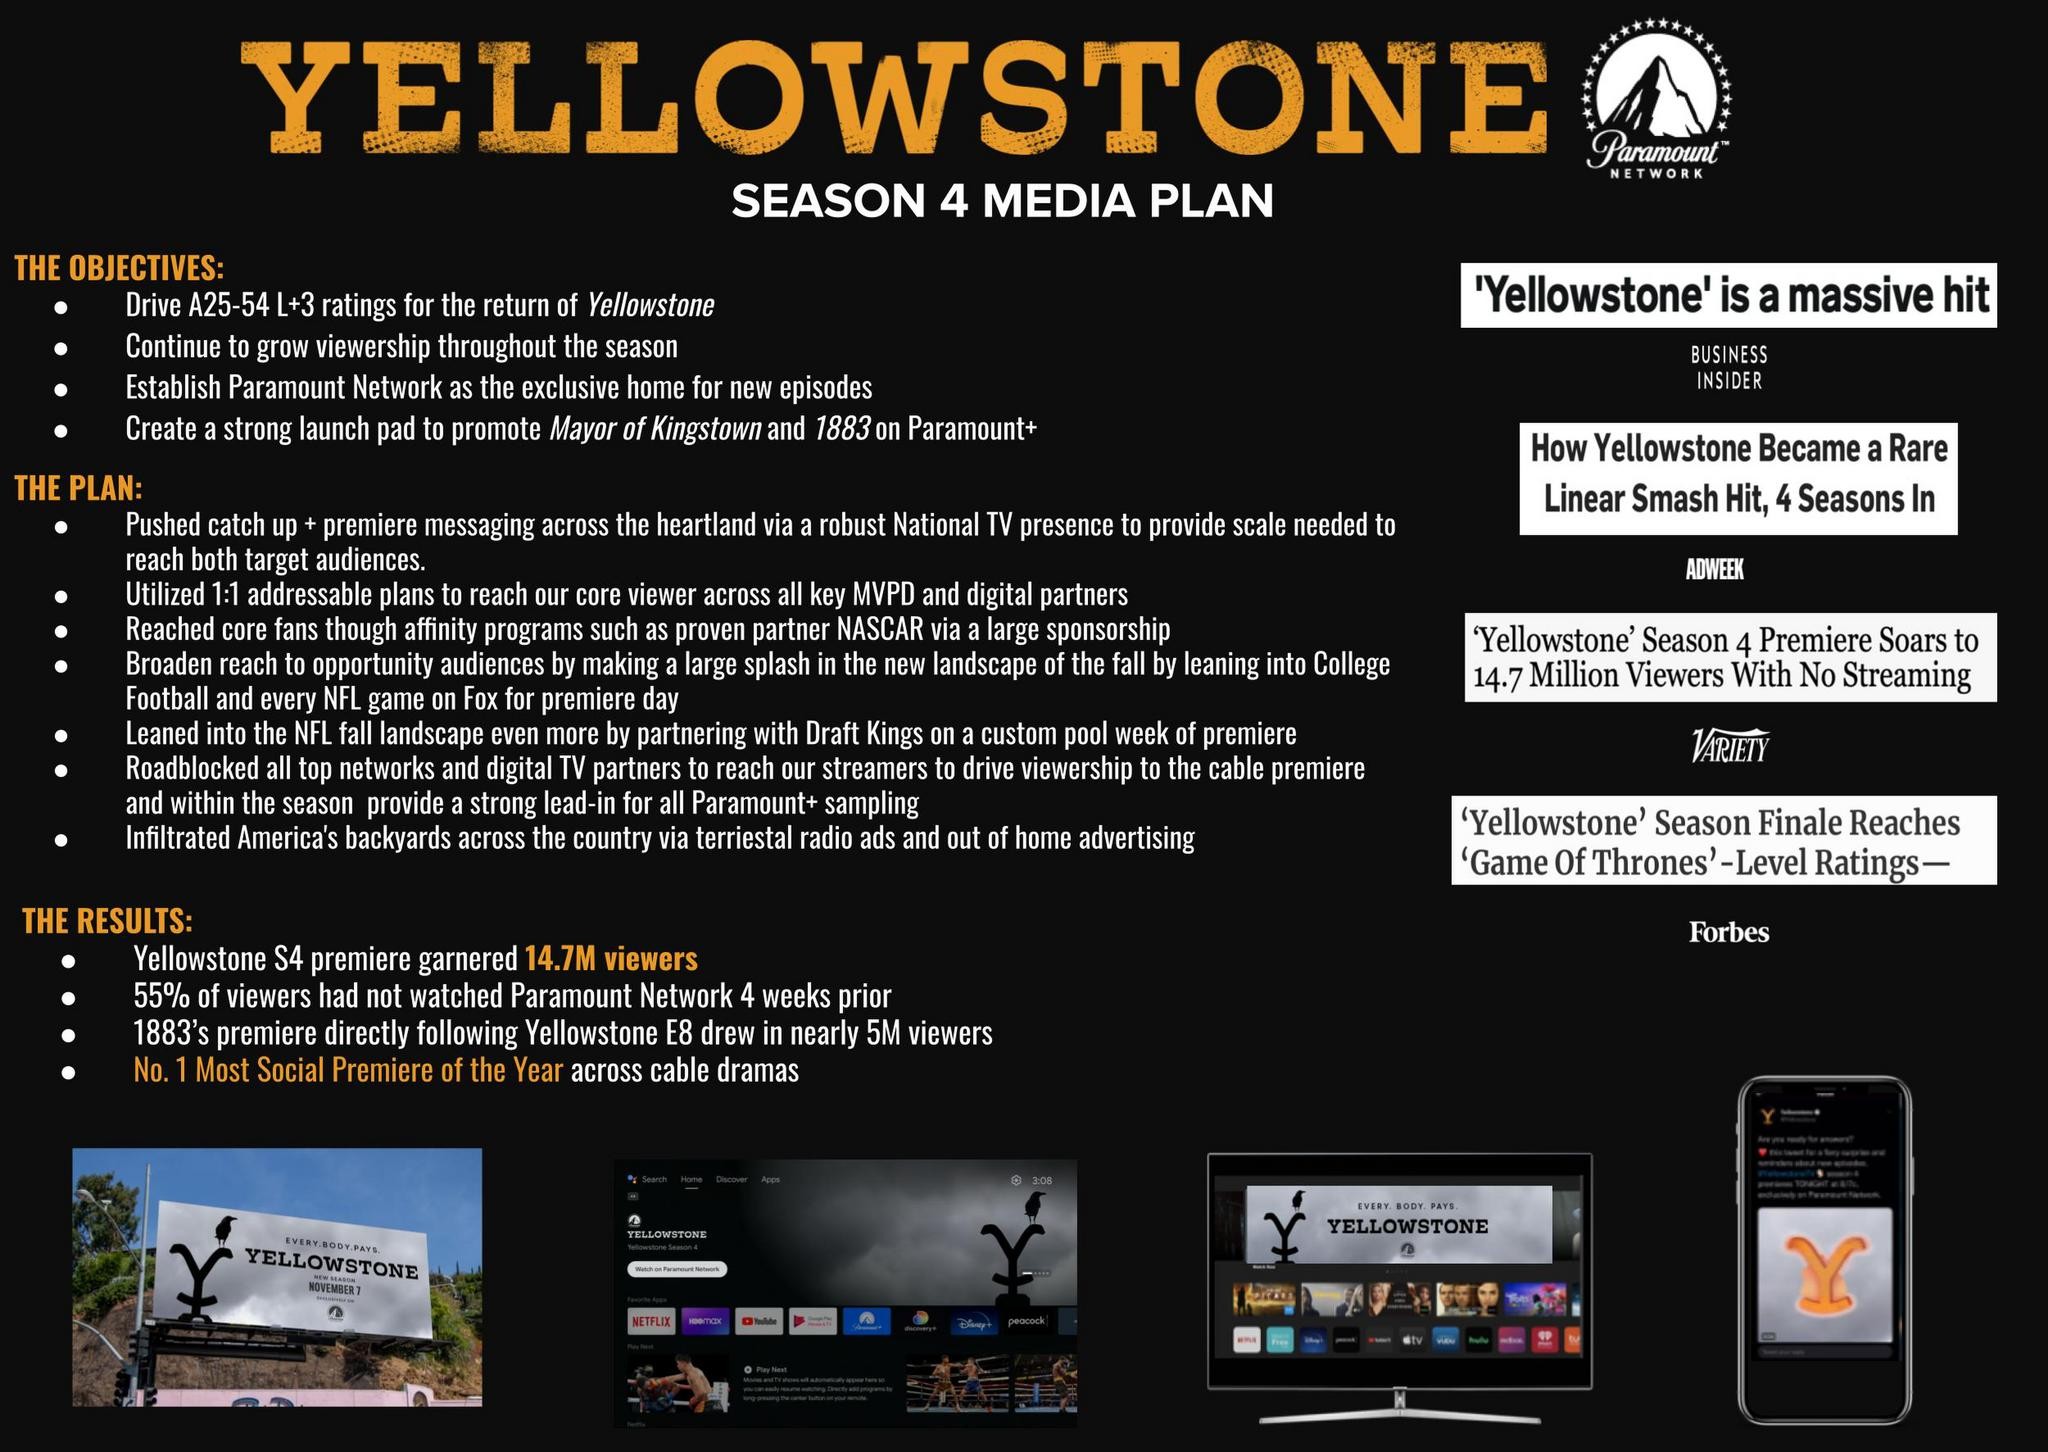 Paramount Network's Yellowstone Season 4